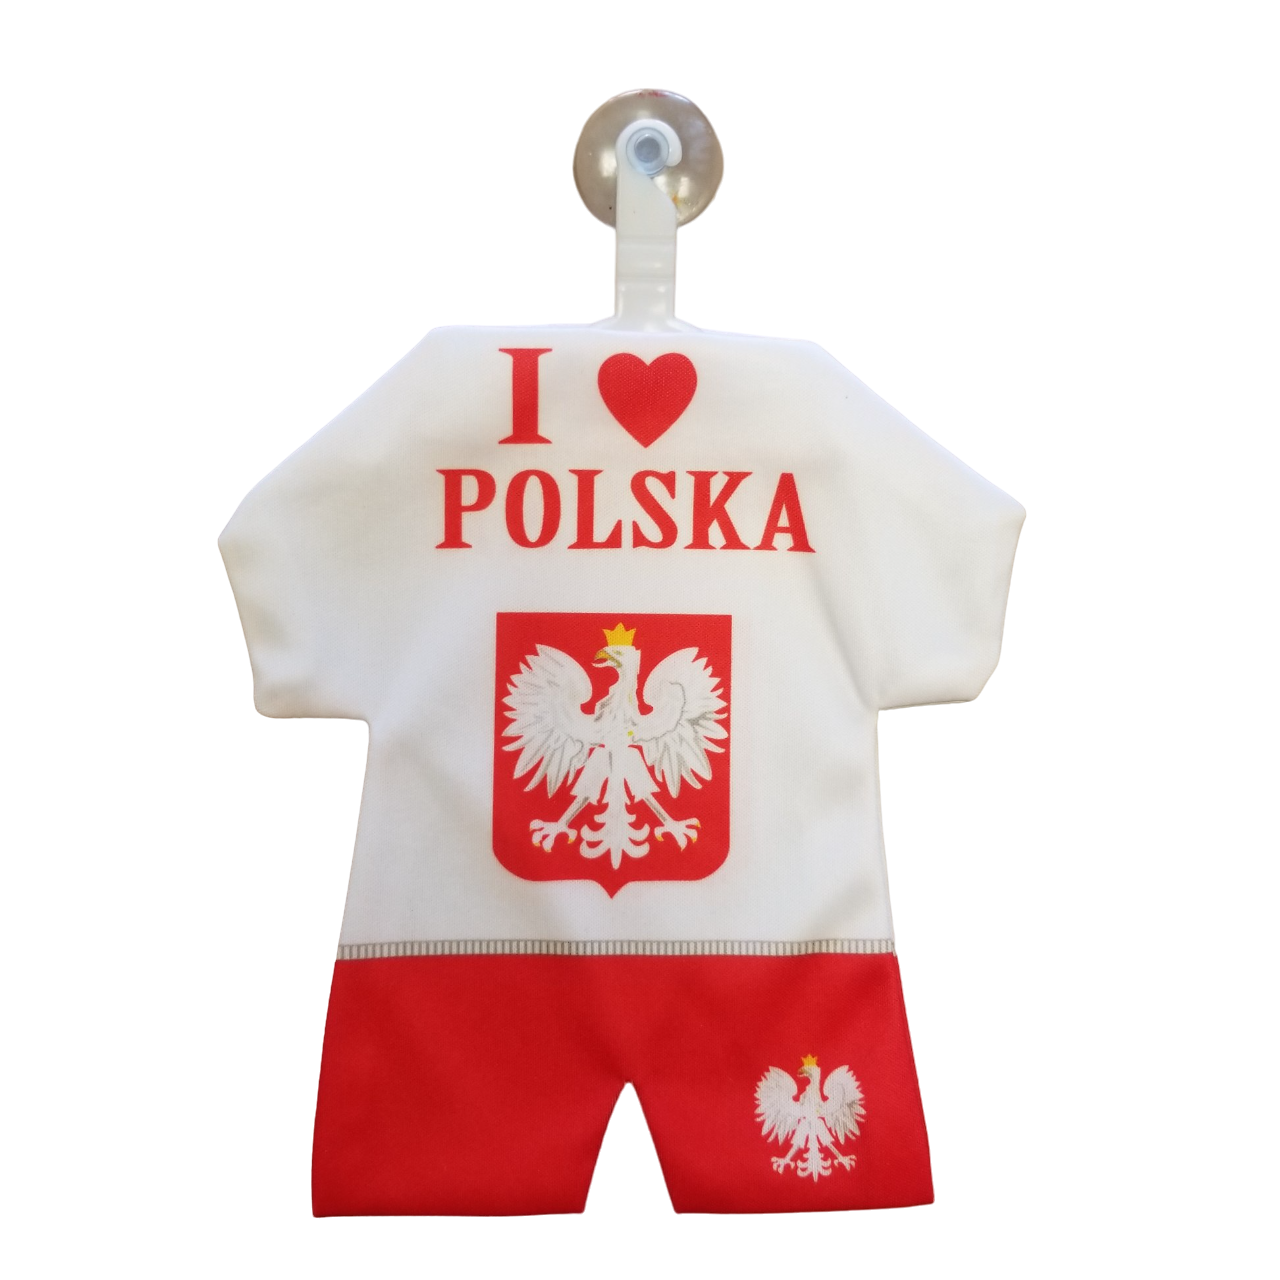 Polska Poland "I love Polska" Mini Kit Soccer Uniform Car Decoration w/ Suction